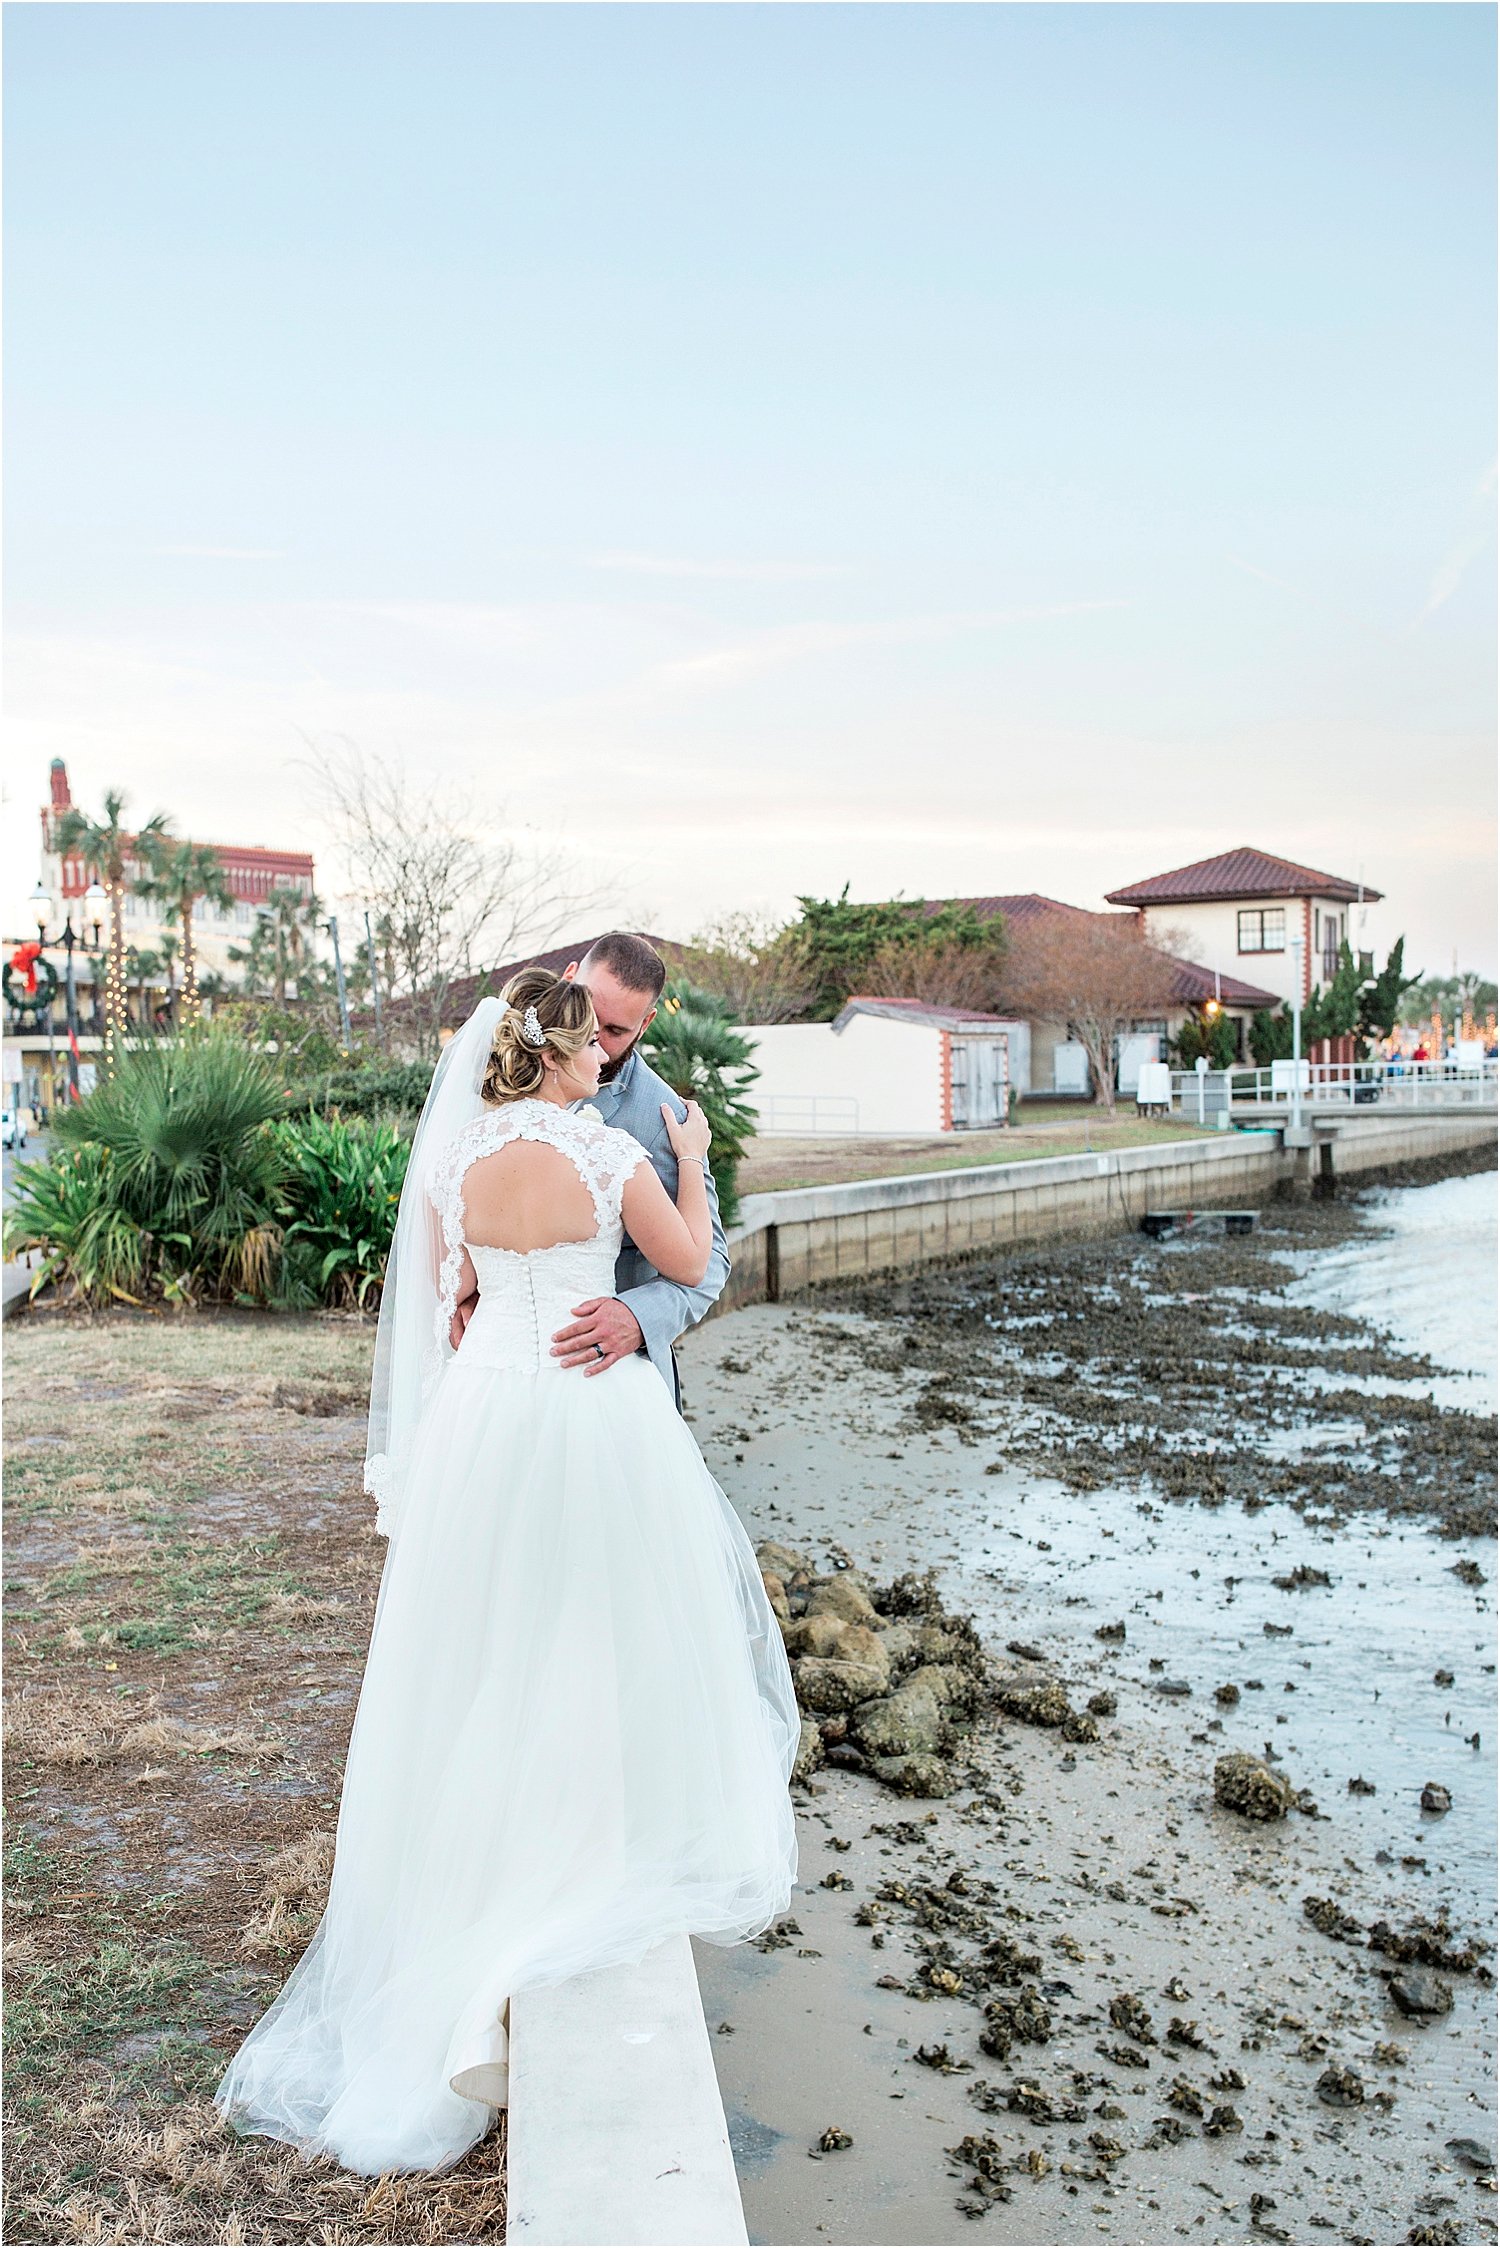 Kasey and Tyler's Wedding at Bayfront Marin St. Augustine, Florida- Jacksonville, Ponte Vedra Beach, St. Augustine, Amelia Island, Florida and Destination Fine Art Film Wedding Photography_0022.jpg